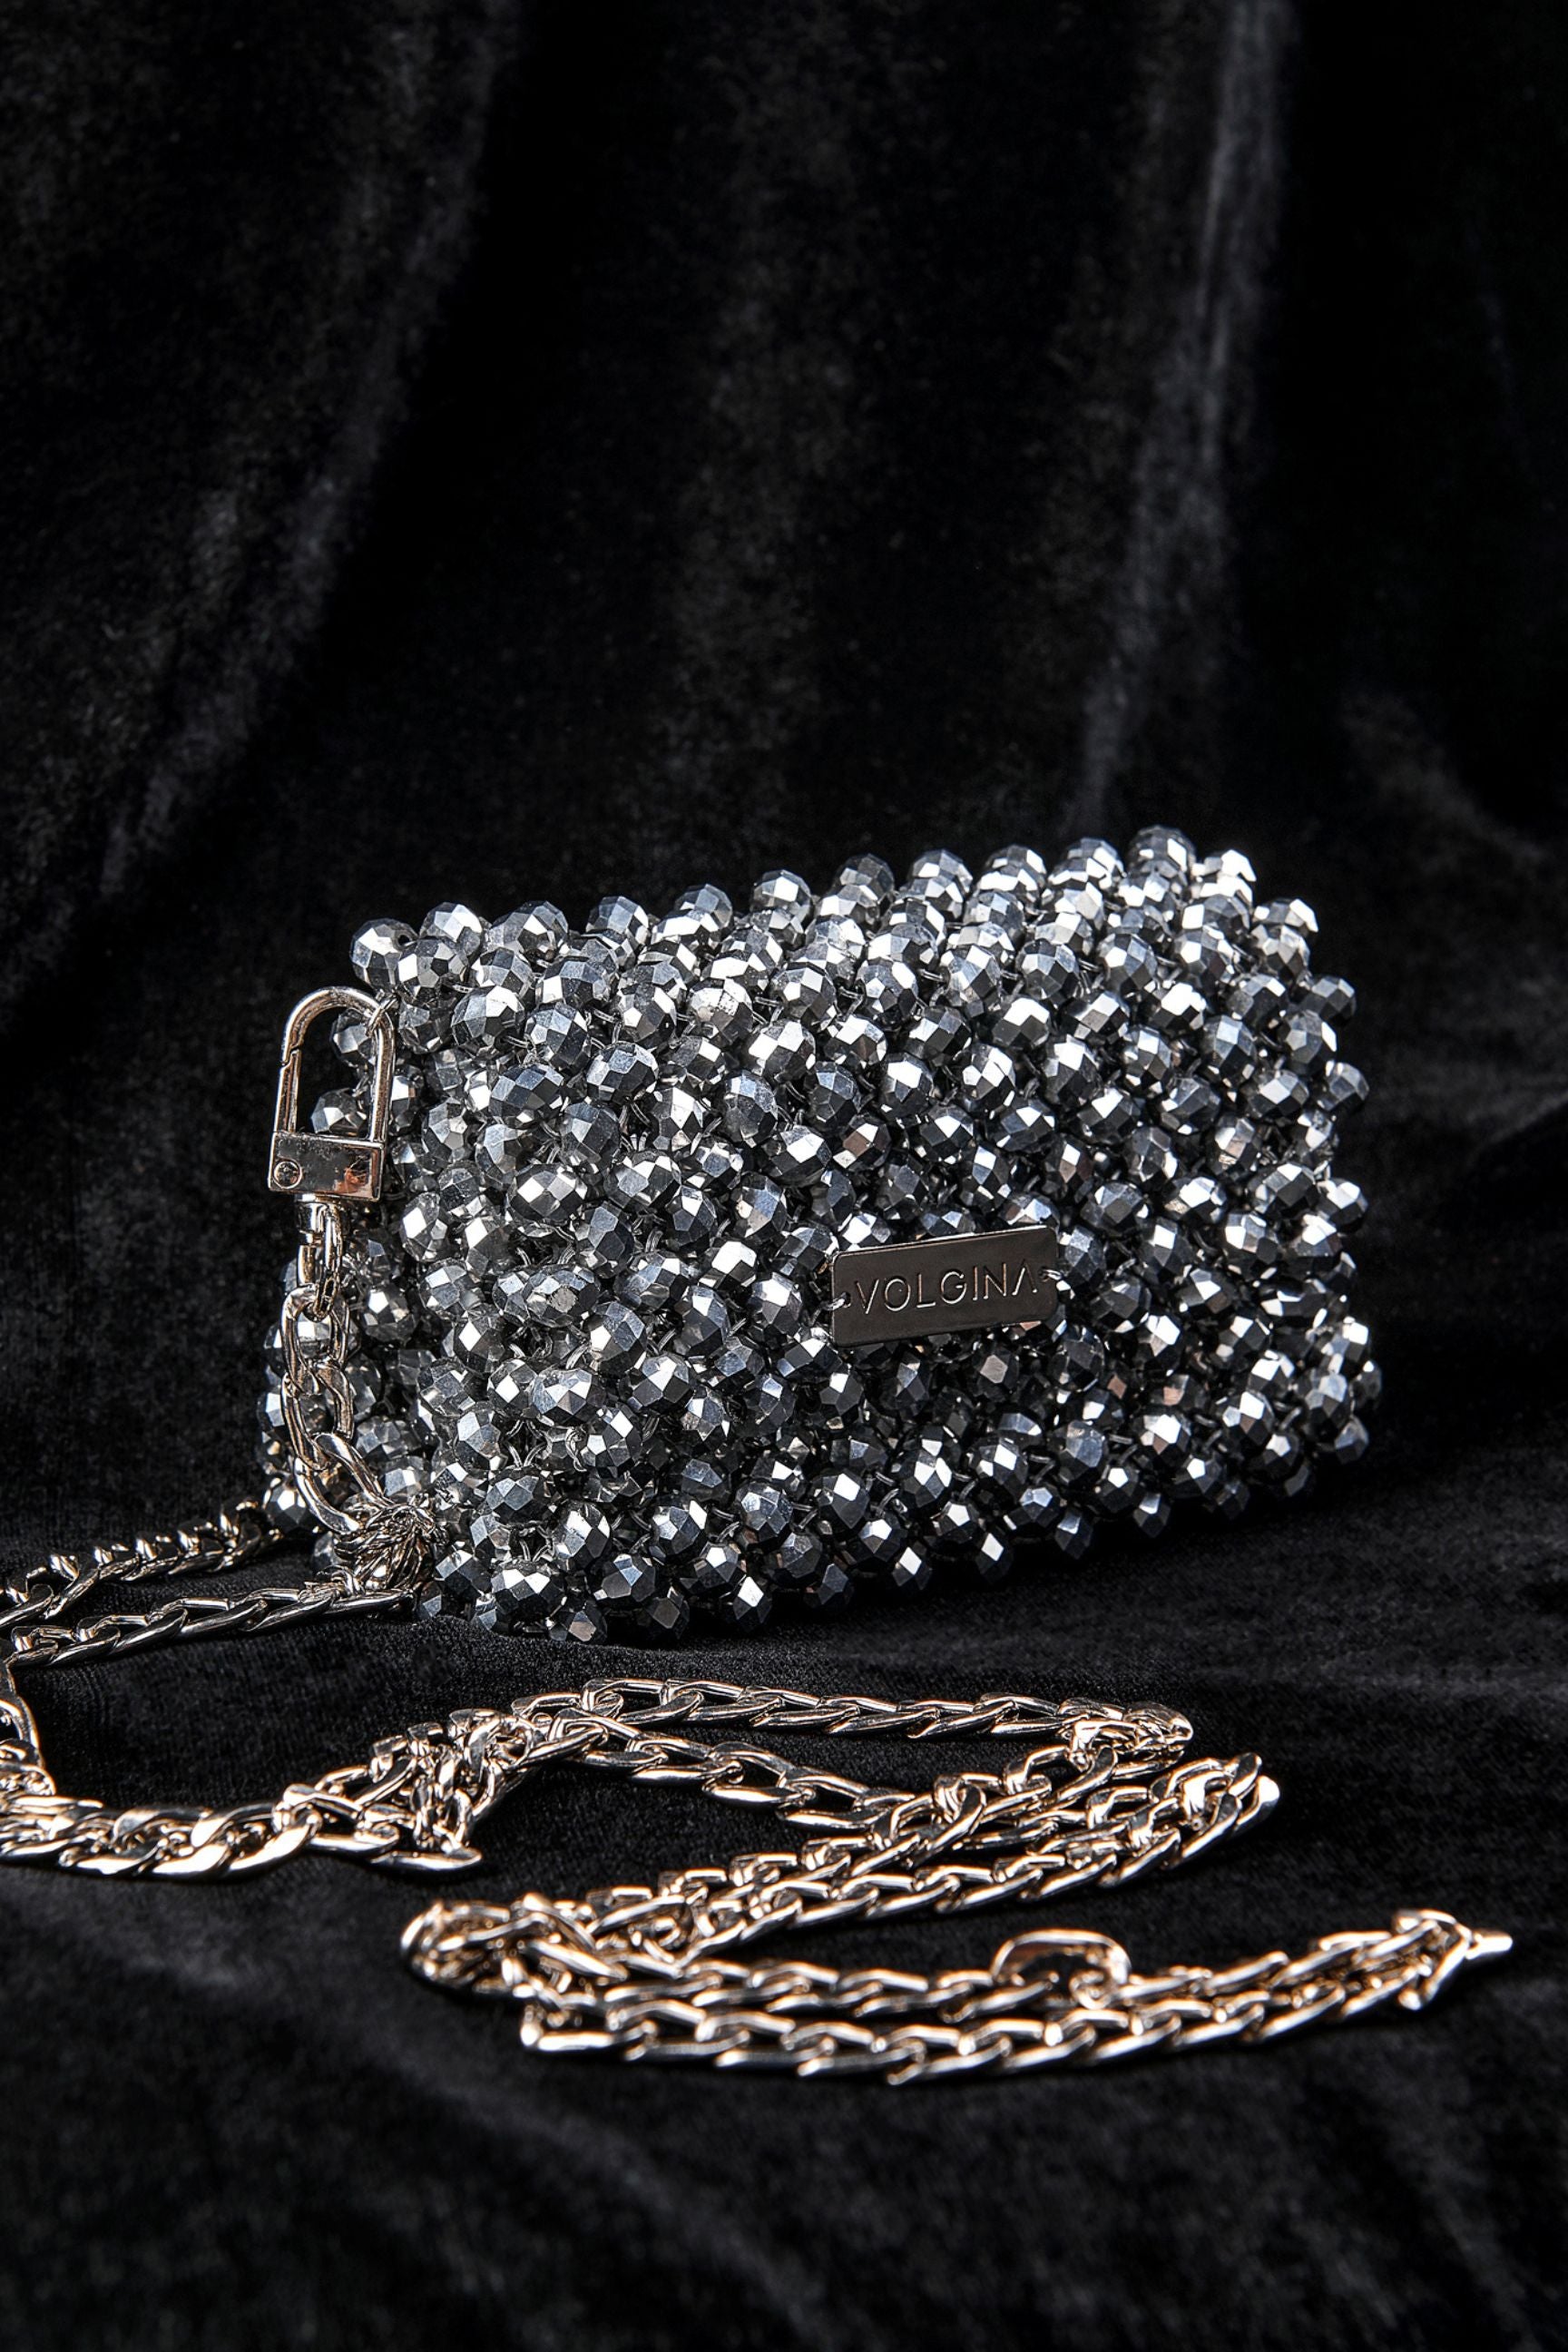 Silver Clutch Bag with Swarovski Crystal Beads, Handmade